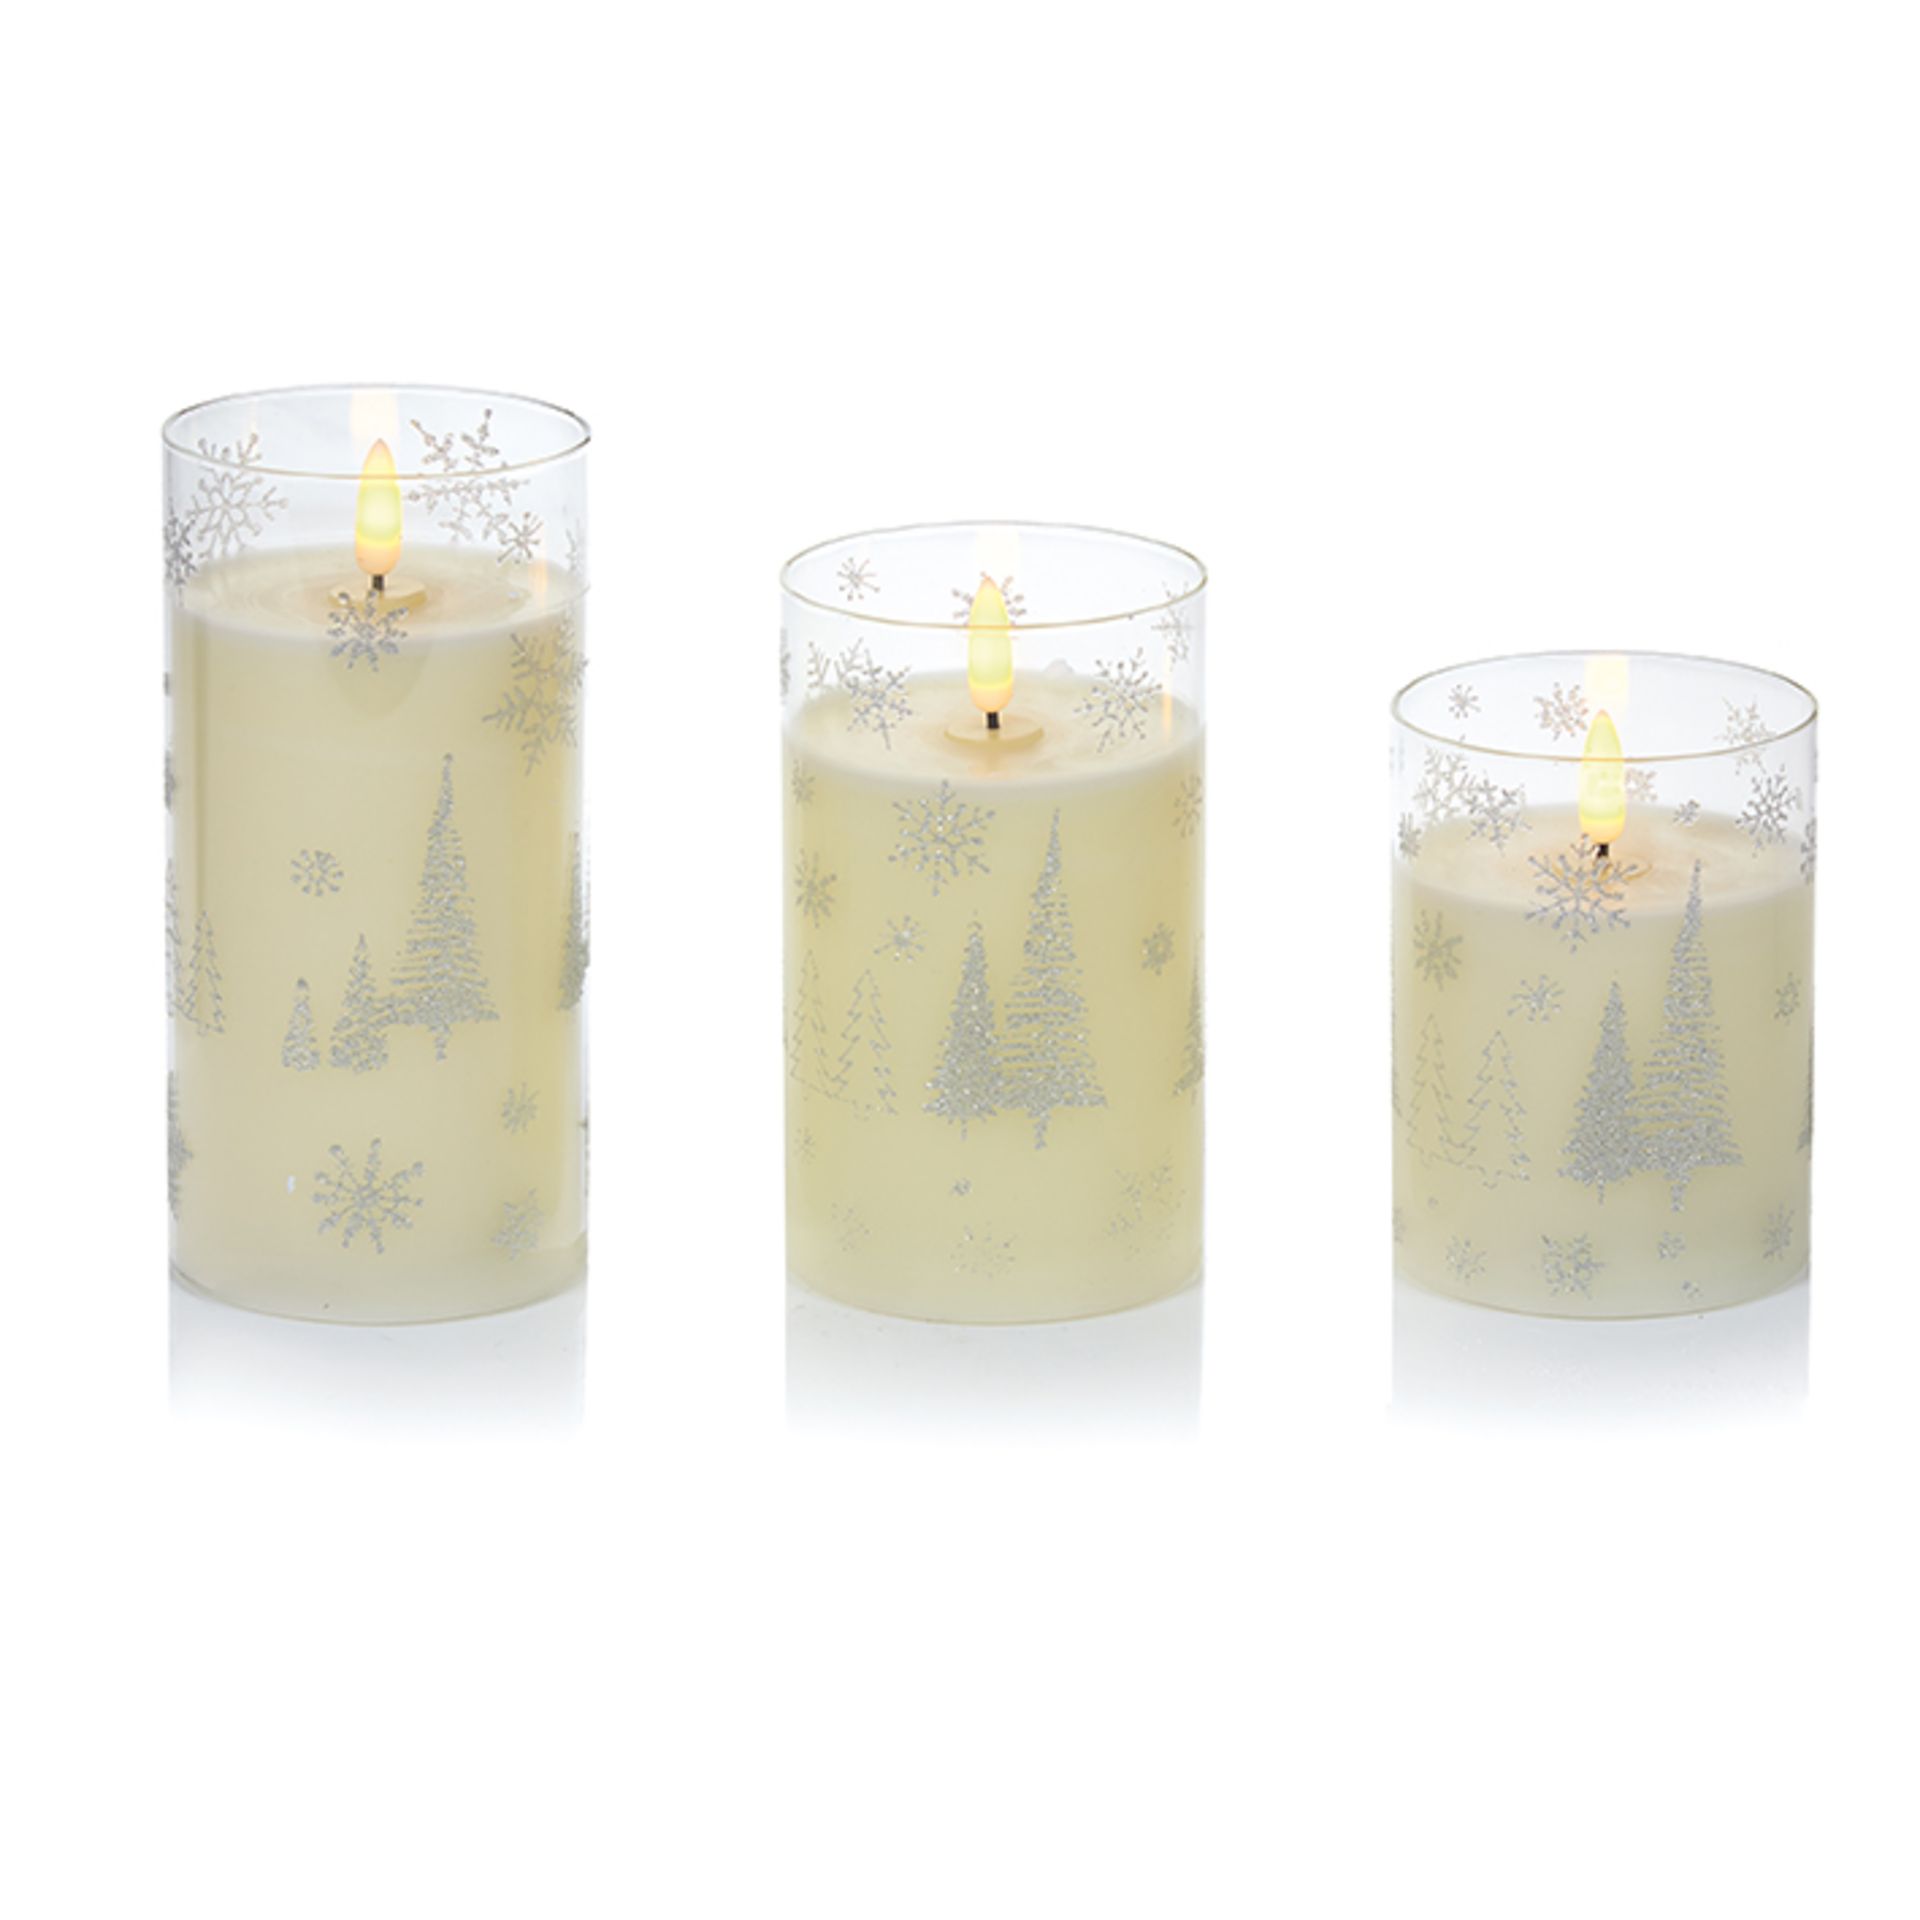 PREMIER SET OF 3 PRINTED CHRISTMAS TREE GLASS CANDLES - Image 2 of 3